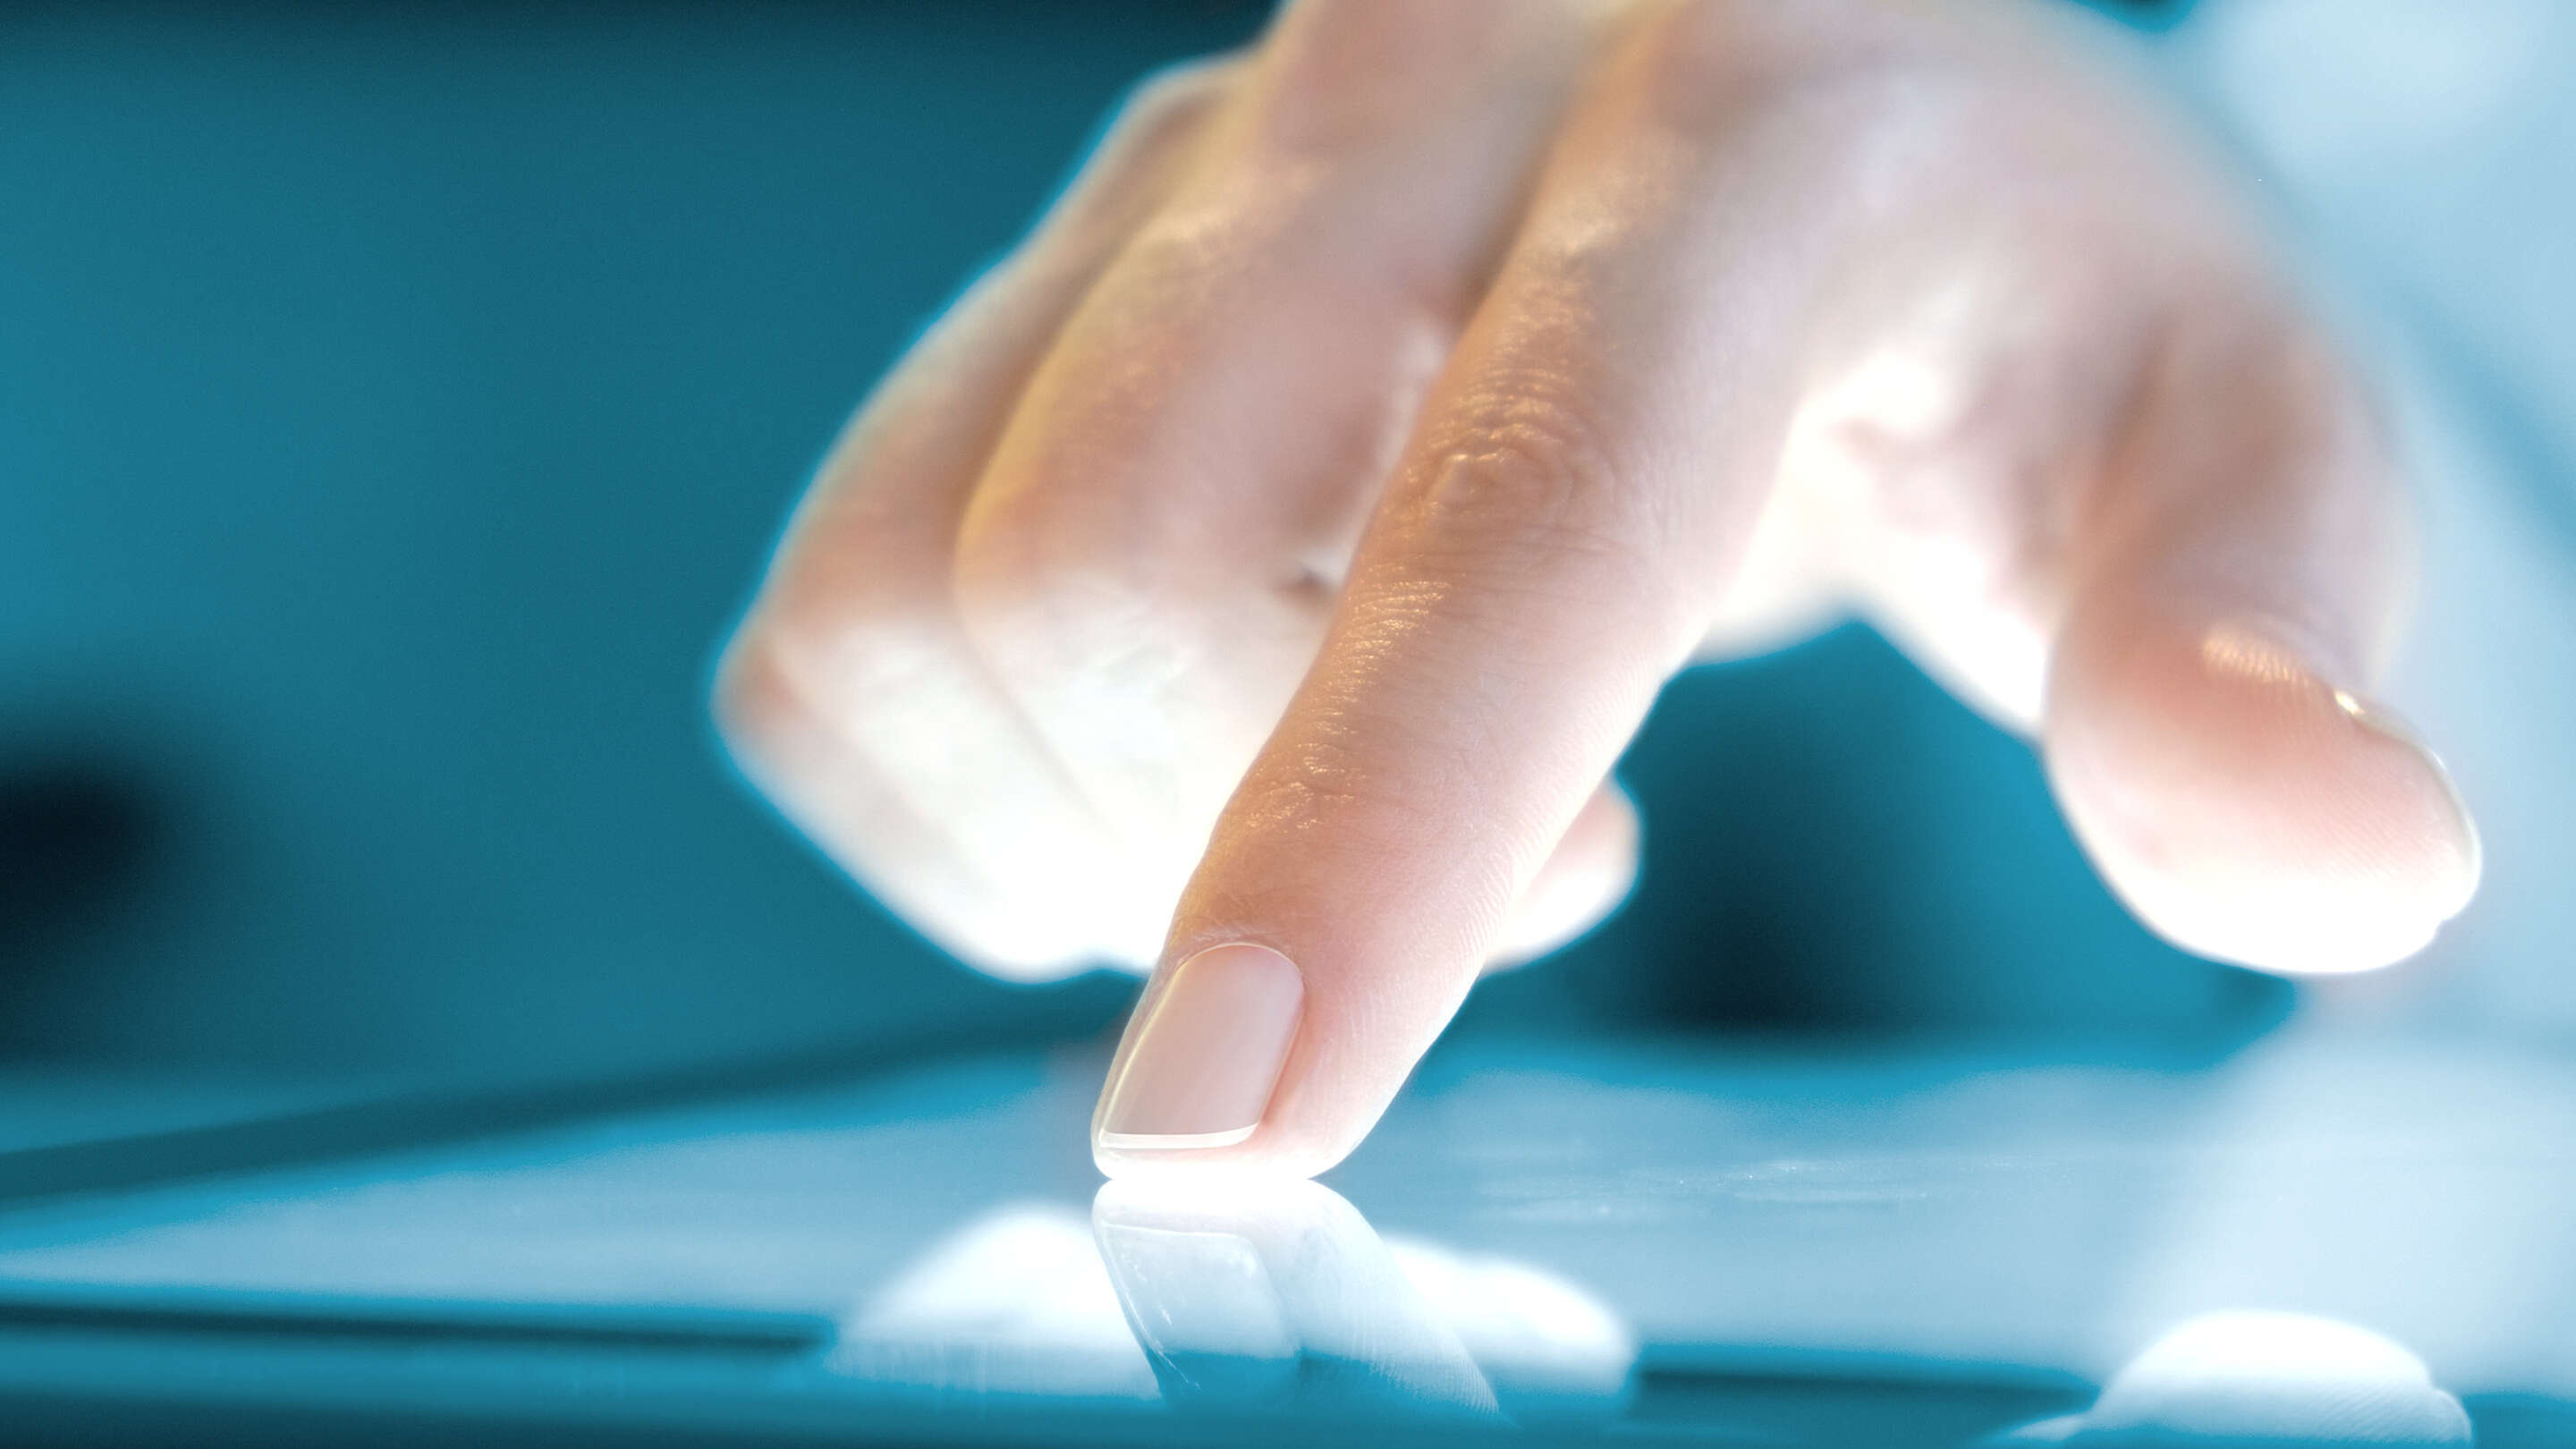 Zaslon osjetljiv na dodir – usporedba tehnologije osjetljivog na dodir izbliza prsta koji dodiruje zaslon osjetljiv na dodir